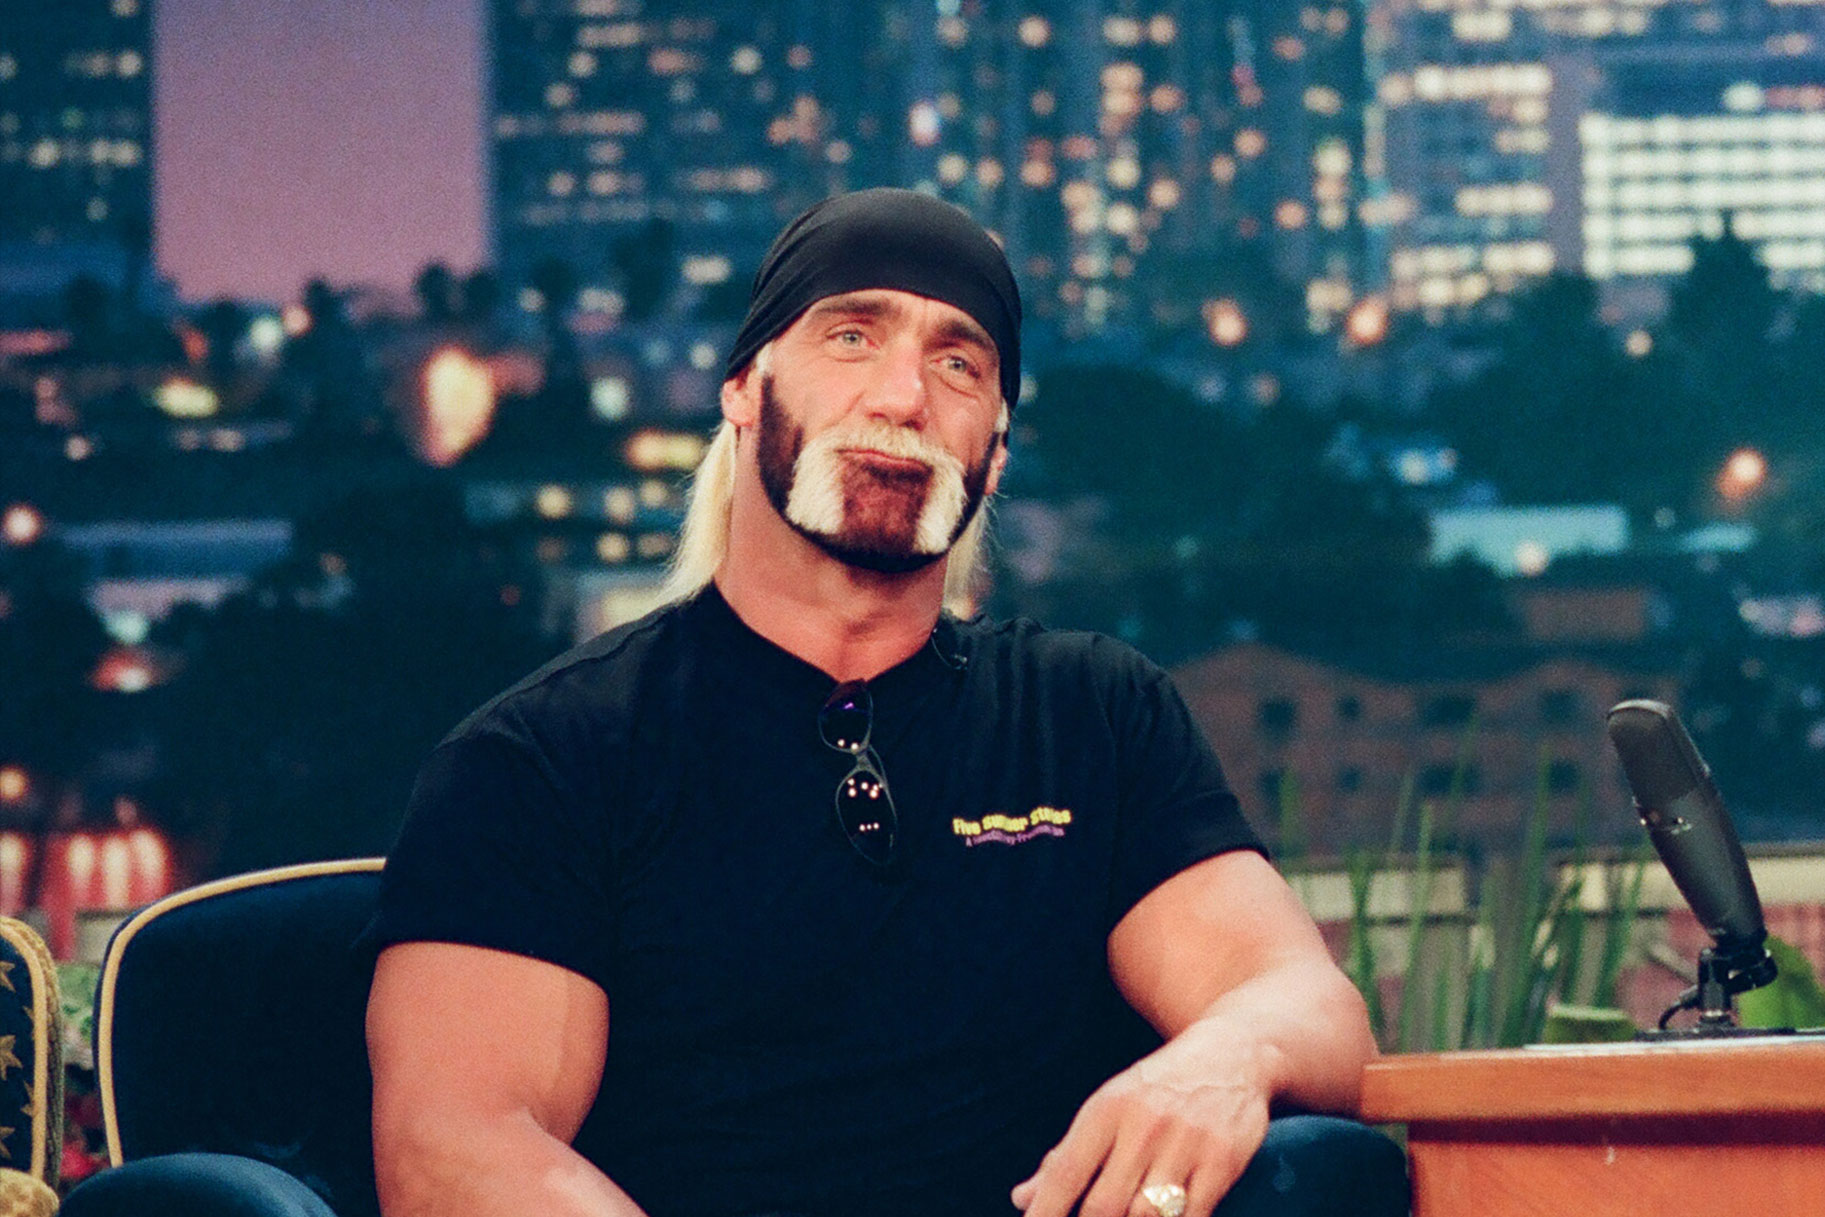 Hulk Hogan sitting in a chair wearing a black shirt